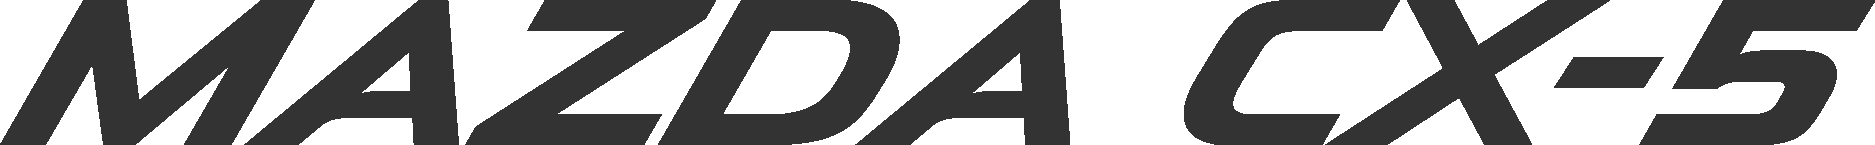 Mazda Cx 5 Logo Vector - (.Ai .PNG .SVG .EPS Free Download)